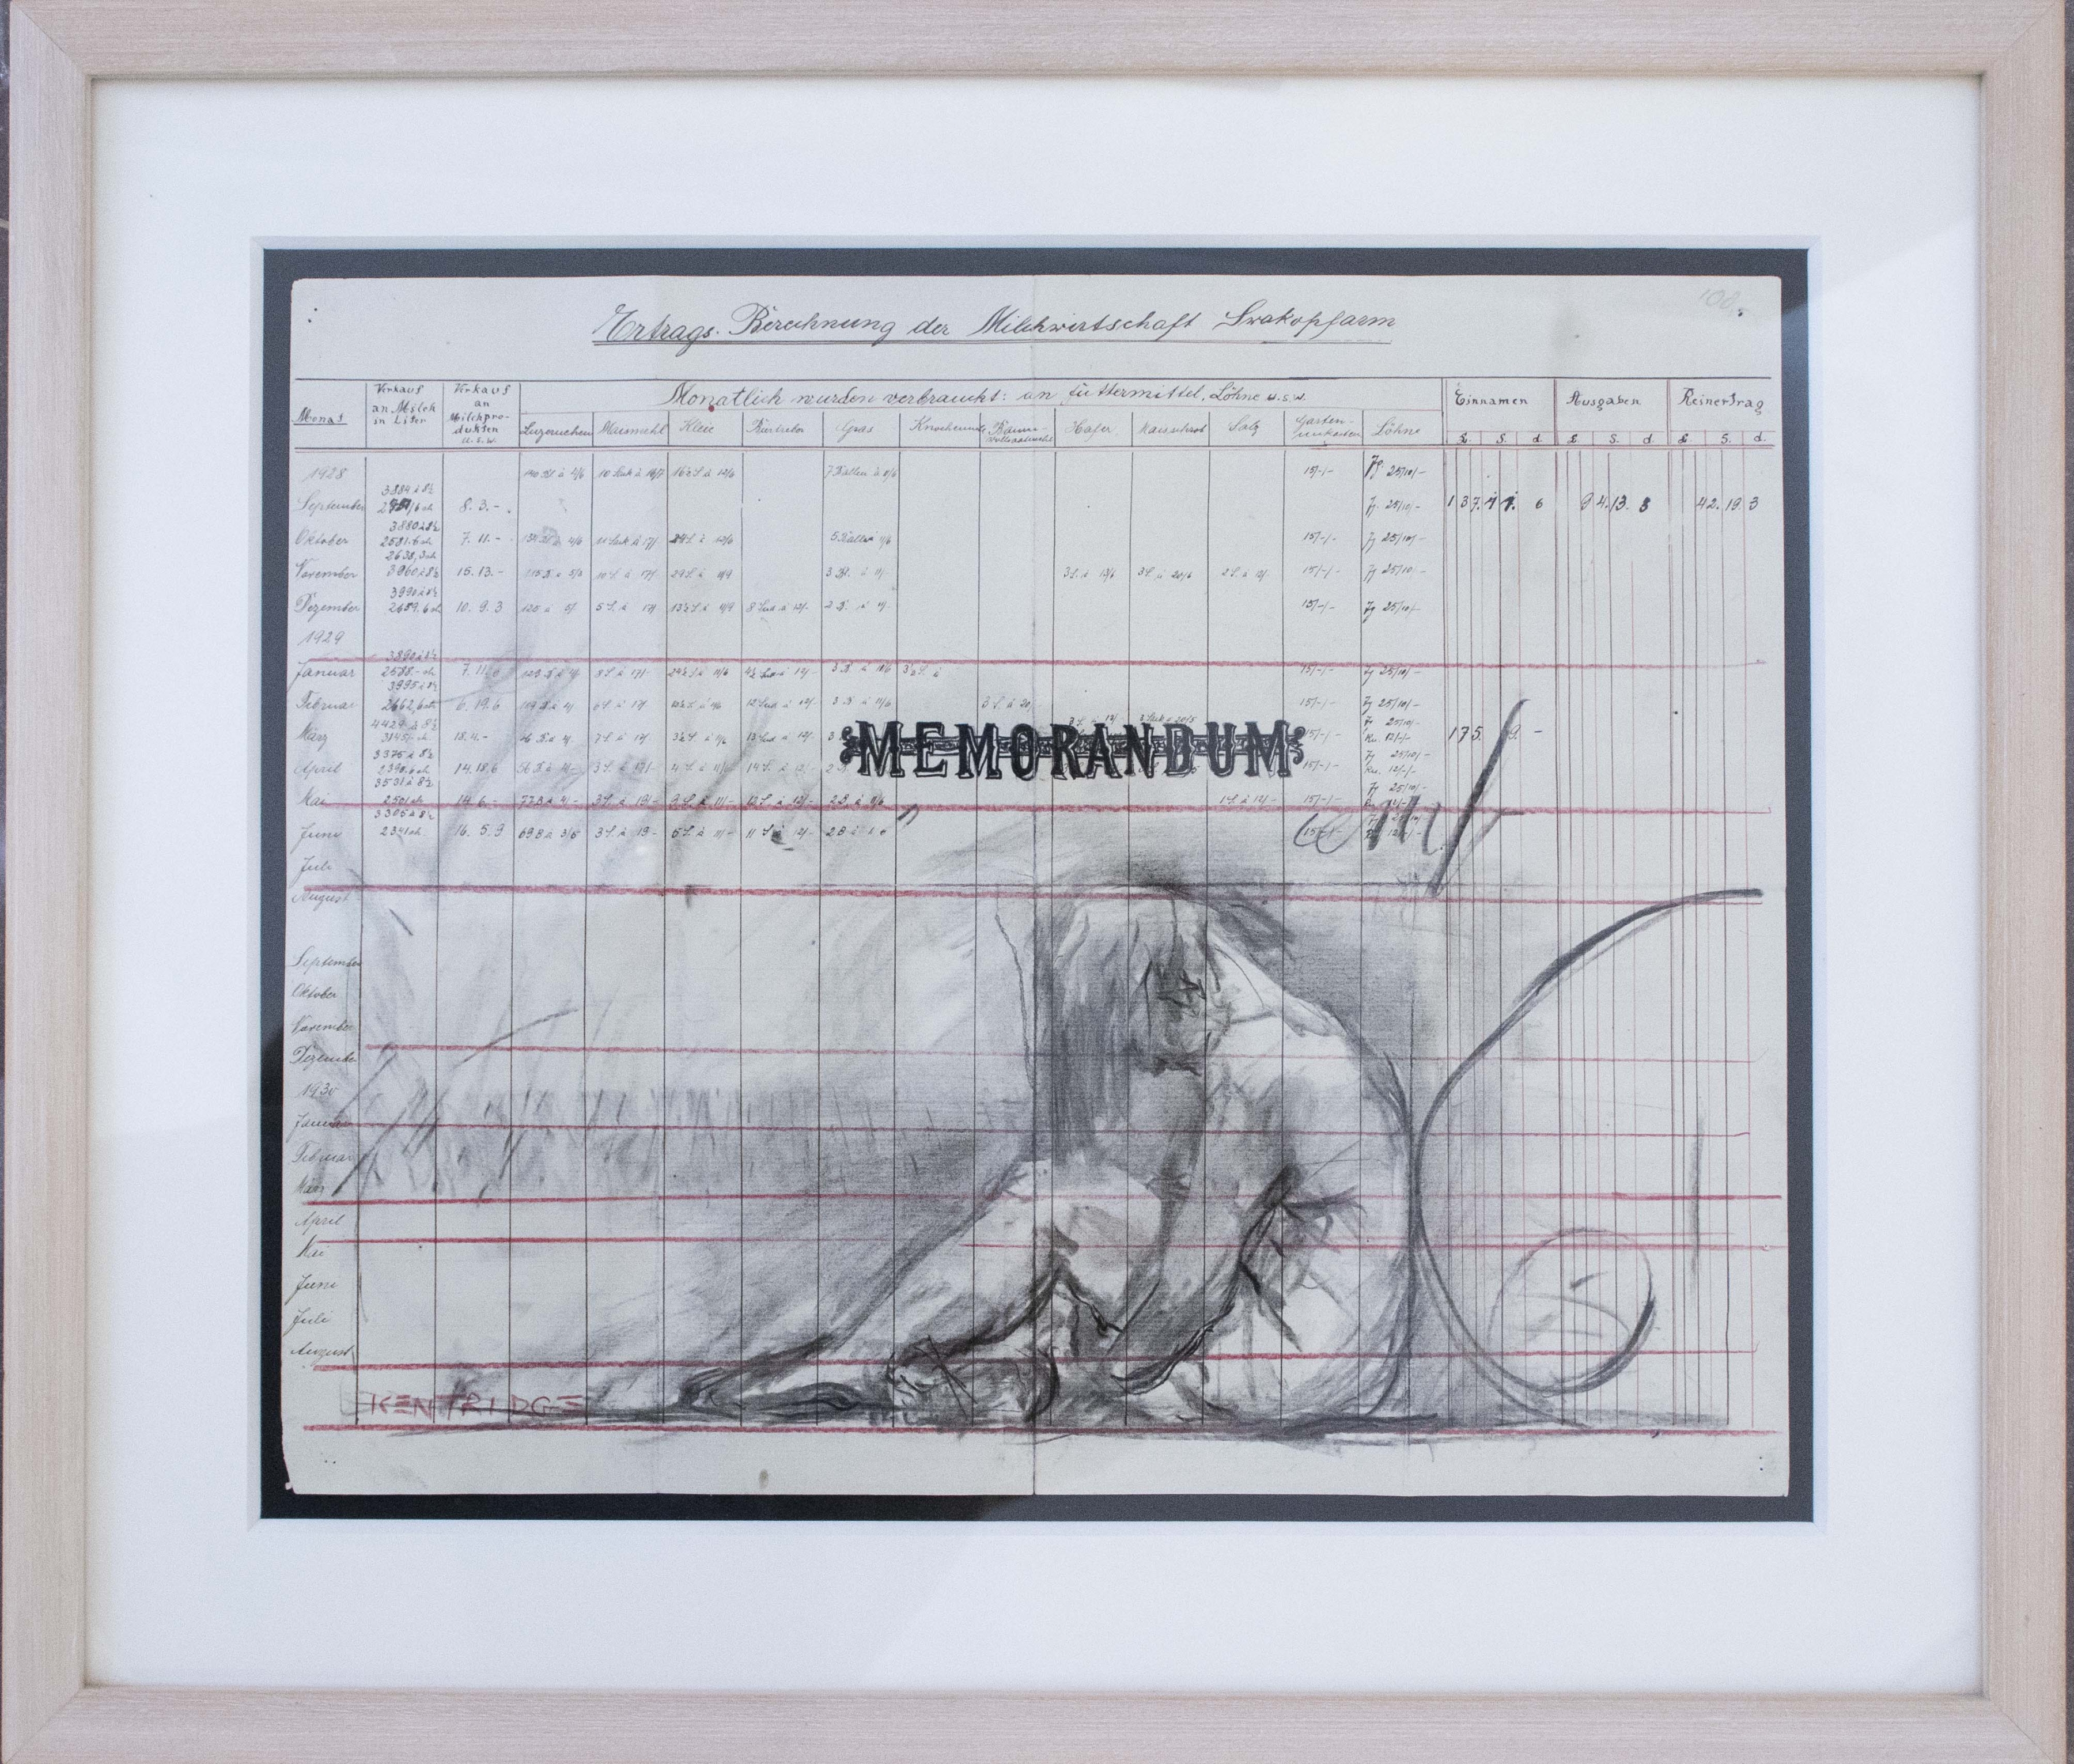 William Kentridge

Untitled (Memorandum - seated Nude), 2004

Pencil on found ledger pages

Frame: 47.5 x 55 cm

Work: 32.5 x 40.5 cm

Enquire